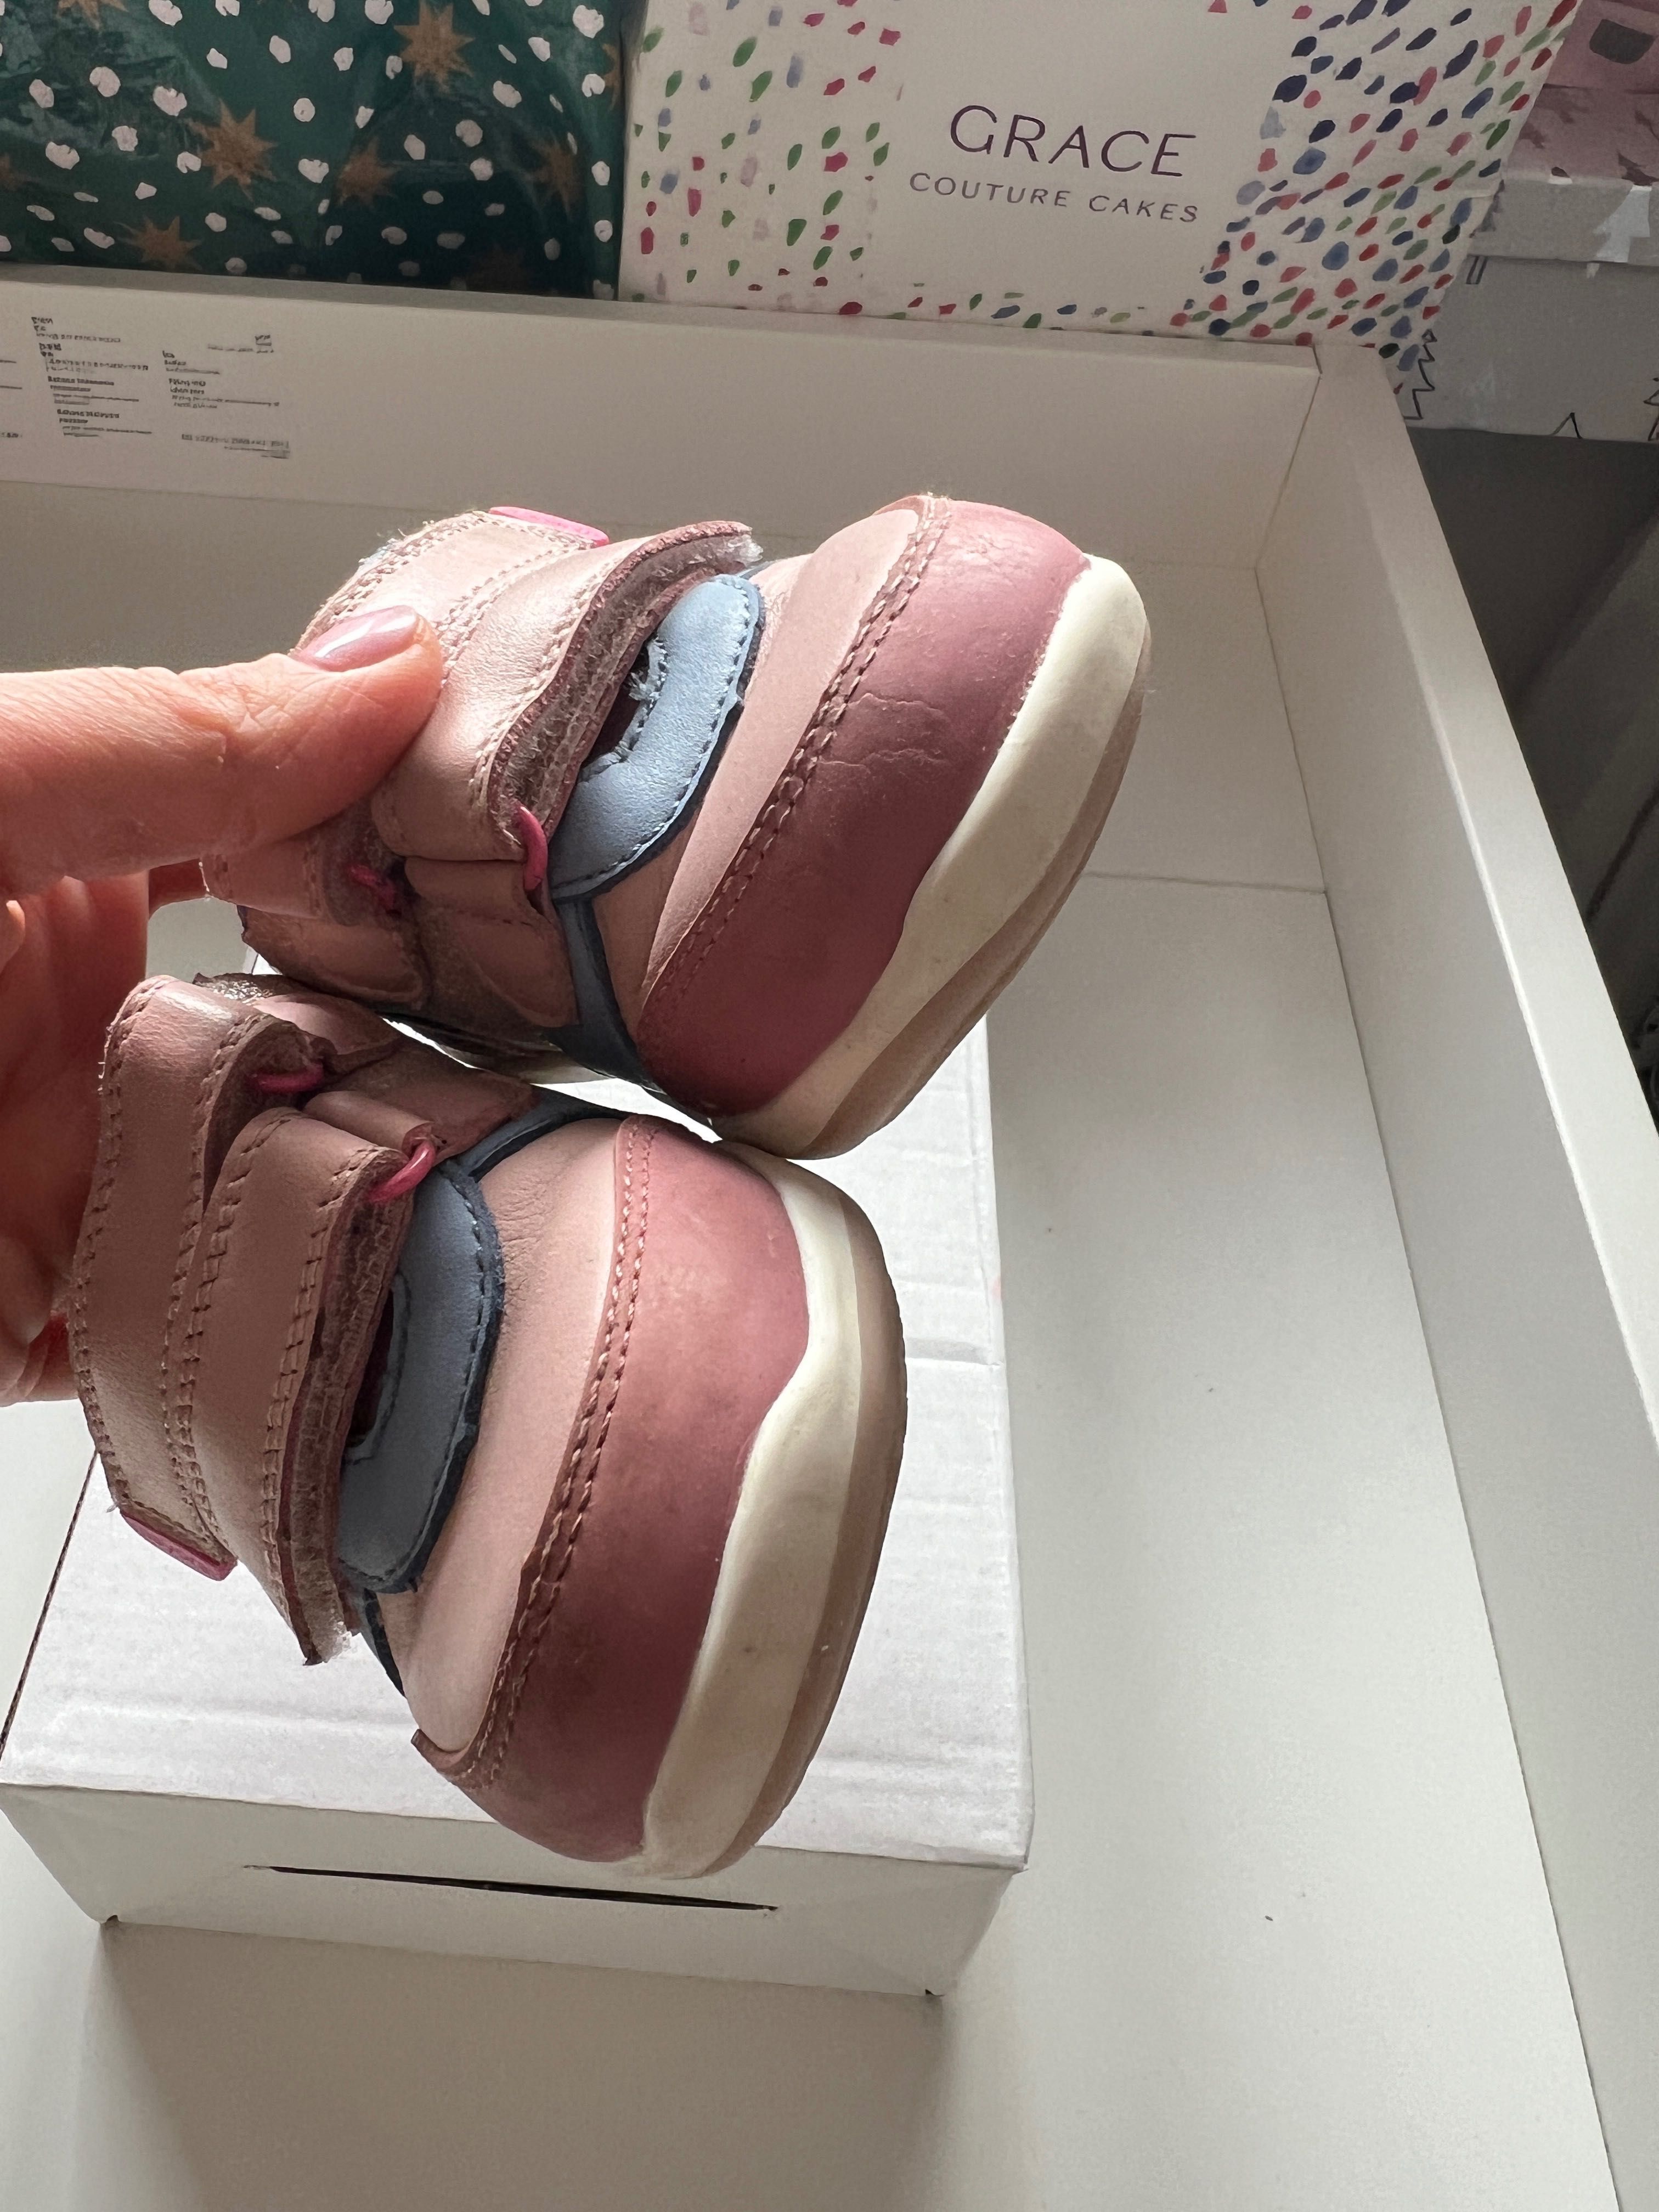 Adidasi / Sneakers Mayoral roz pudra, 22